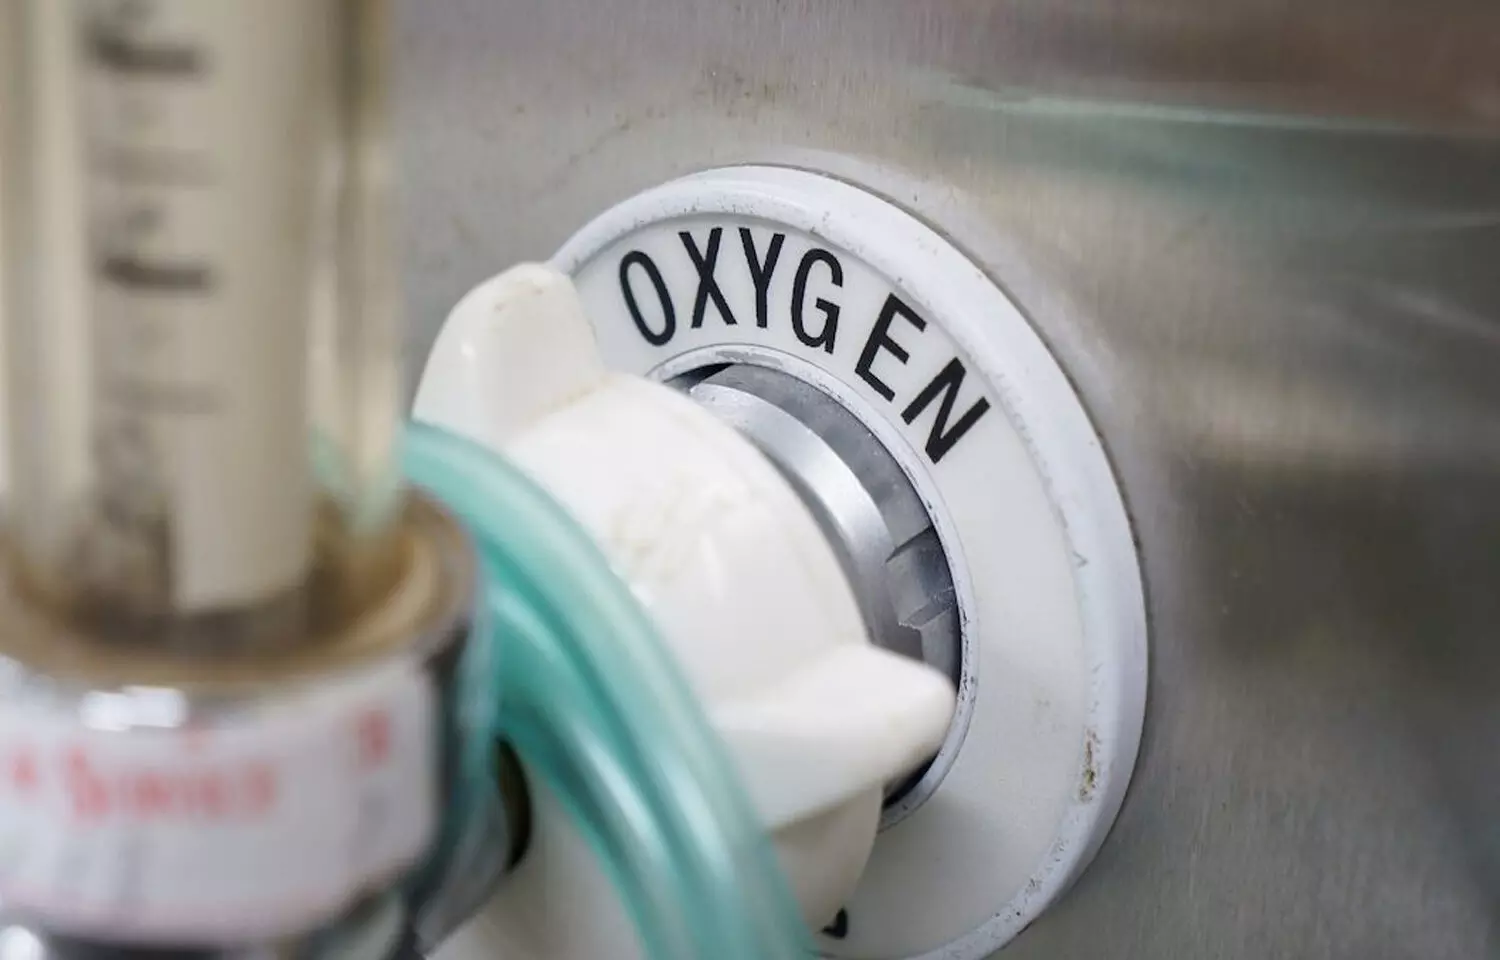 Acute Oxygen shortage in hospitals: Senior Delhi doctor breaks down on camera